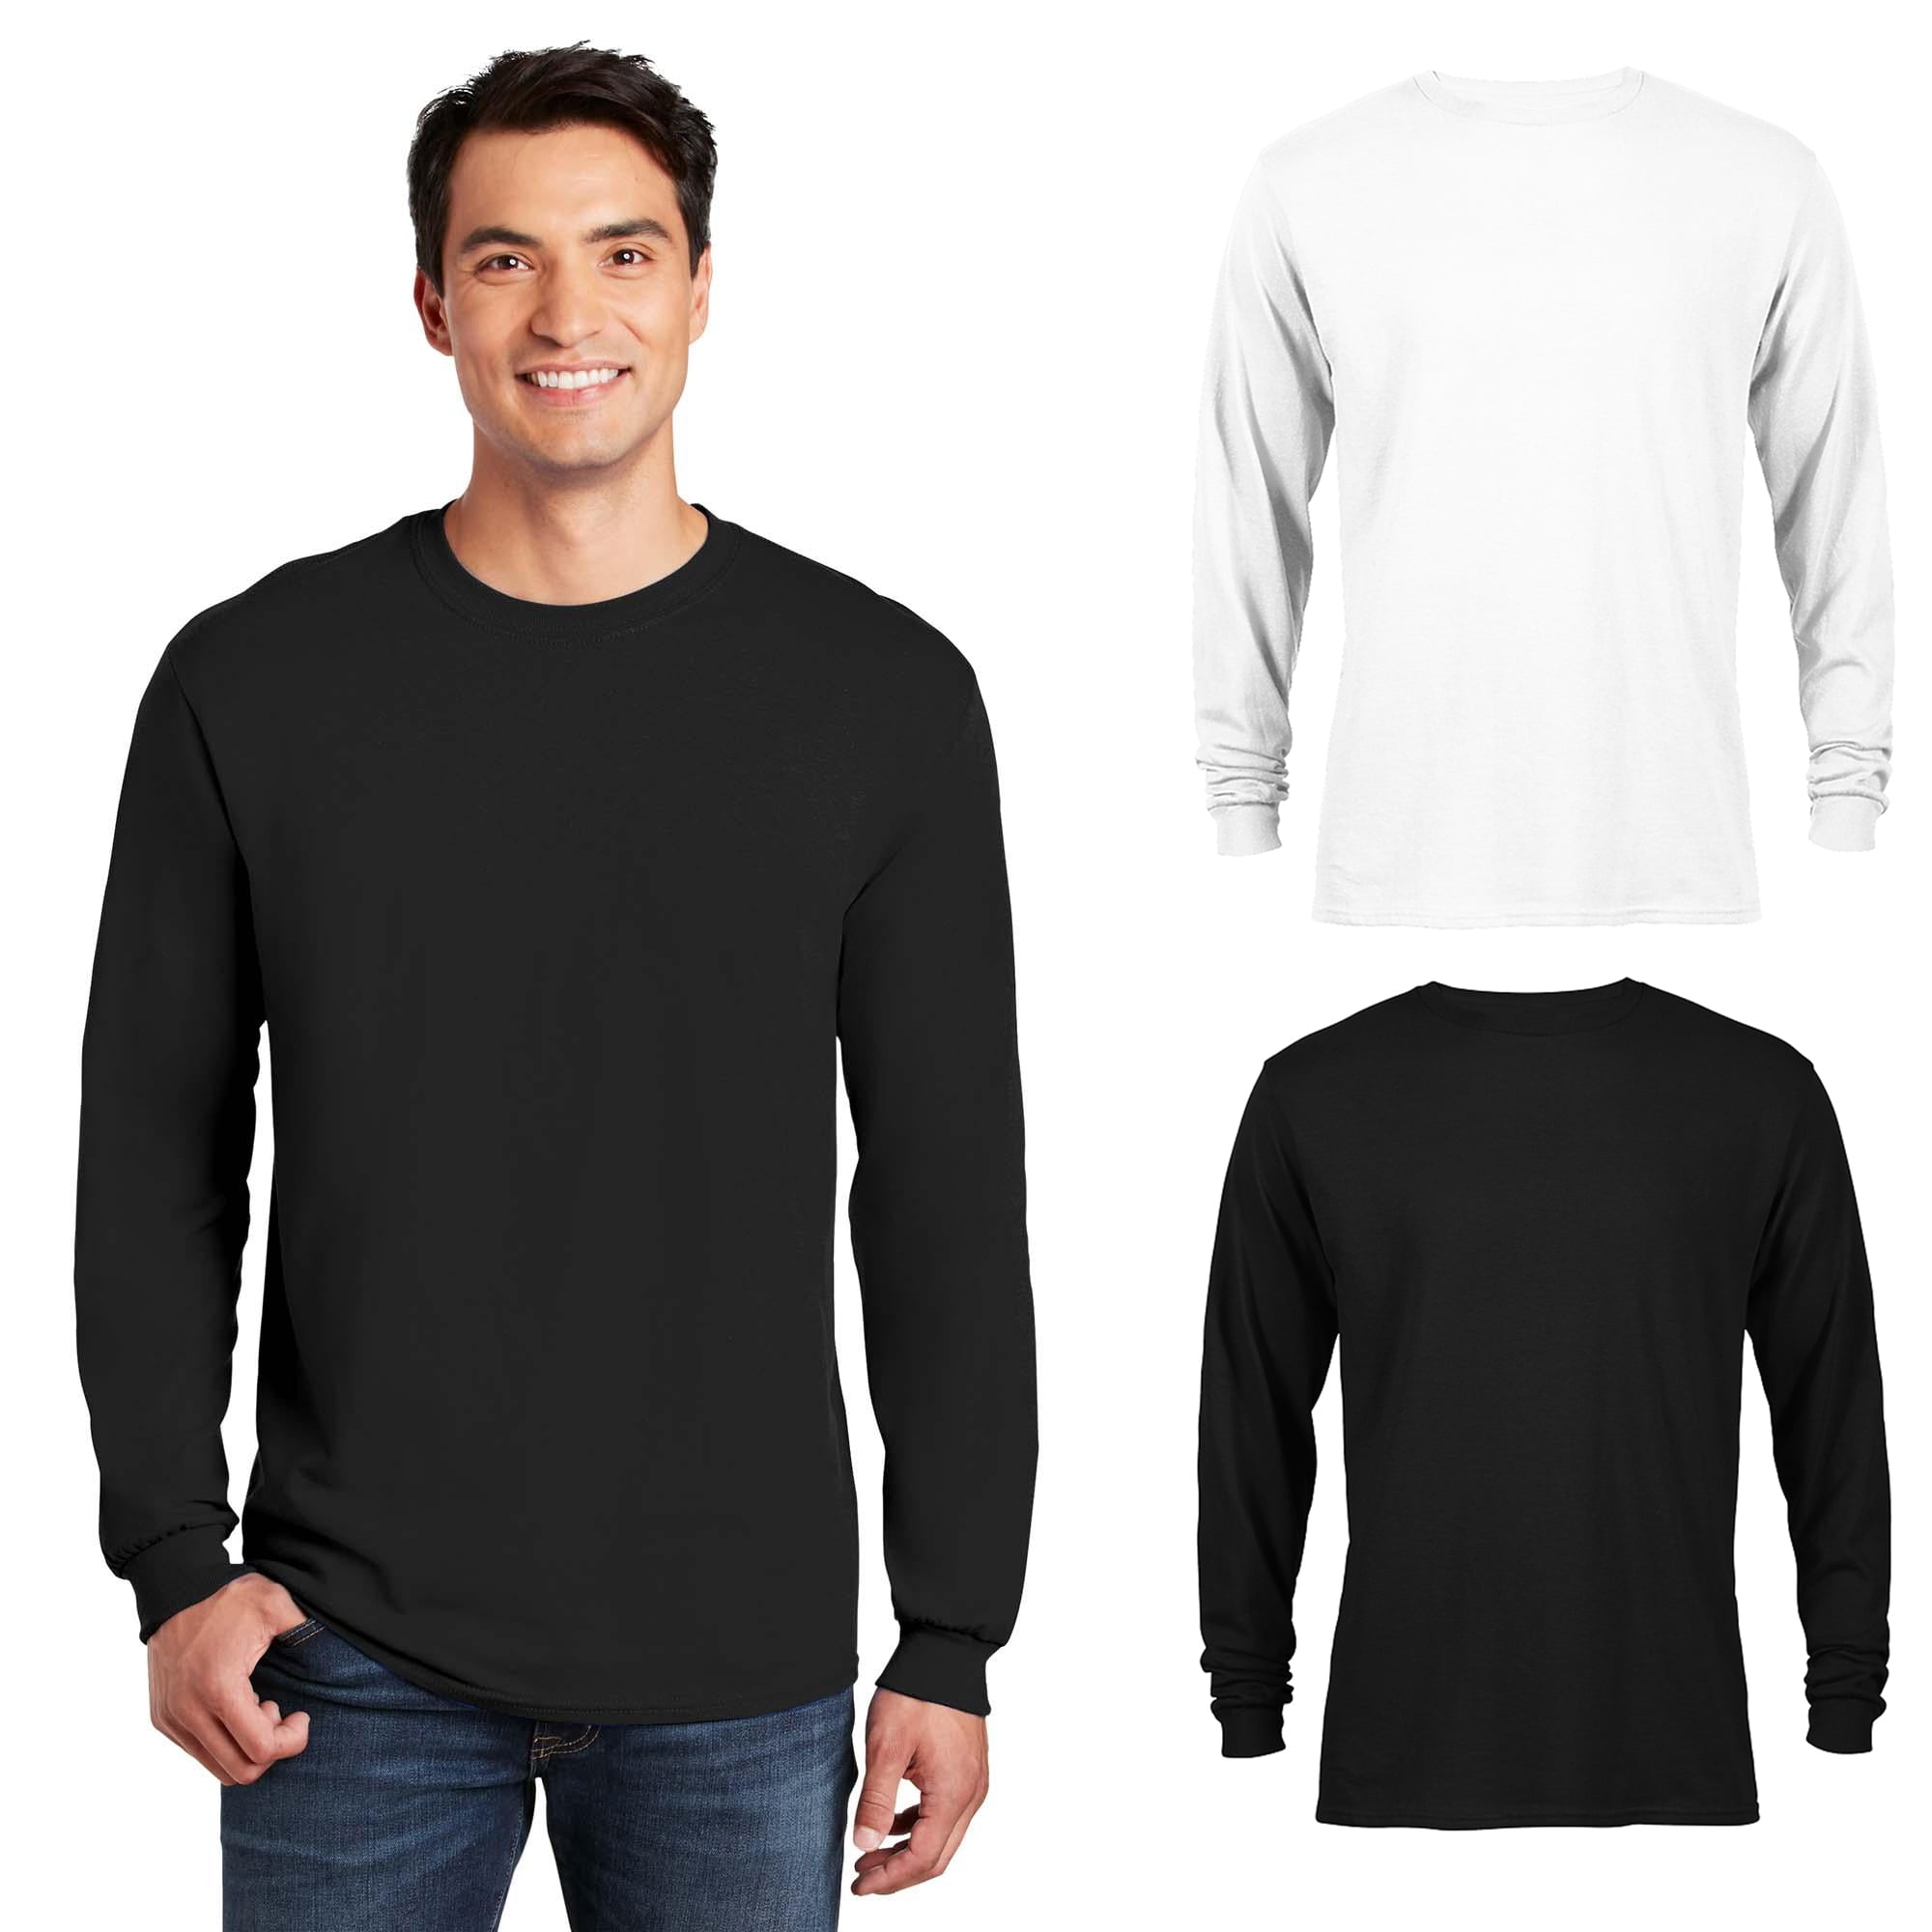 Long-Sleeve T-Shirts - Value Black T-Shirts - White T-Shirts